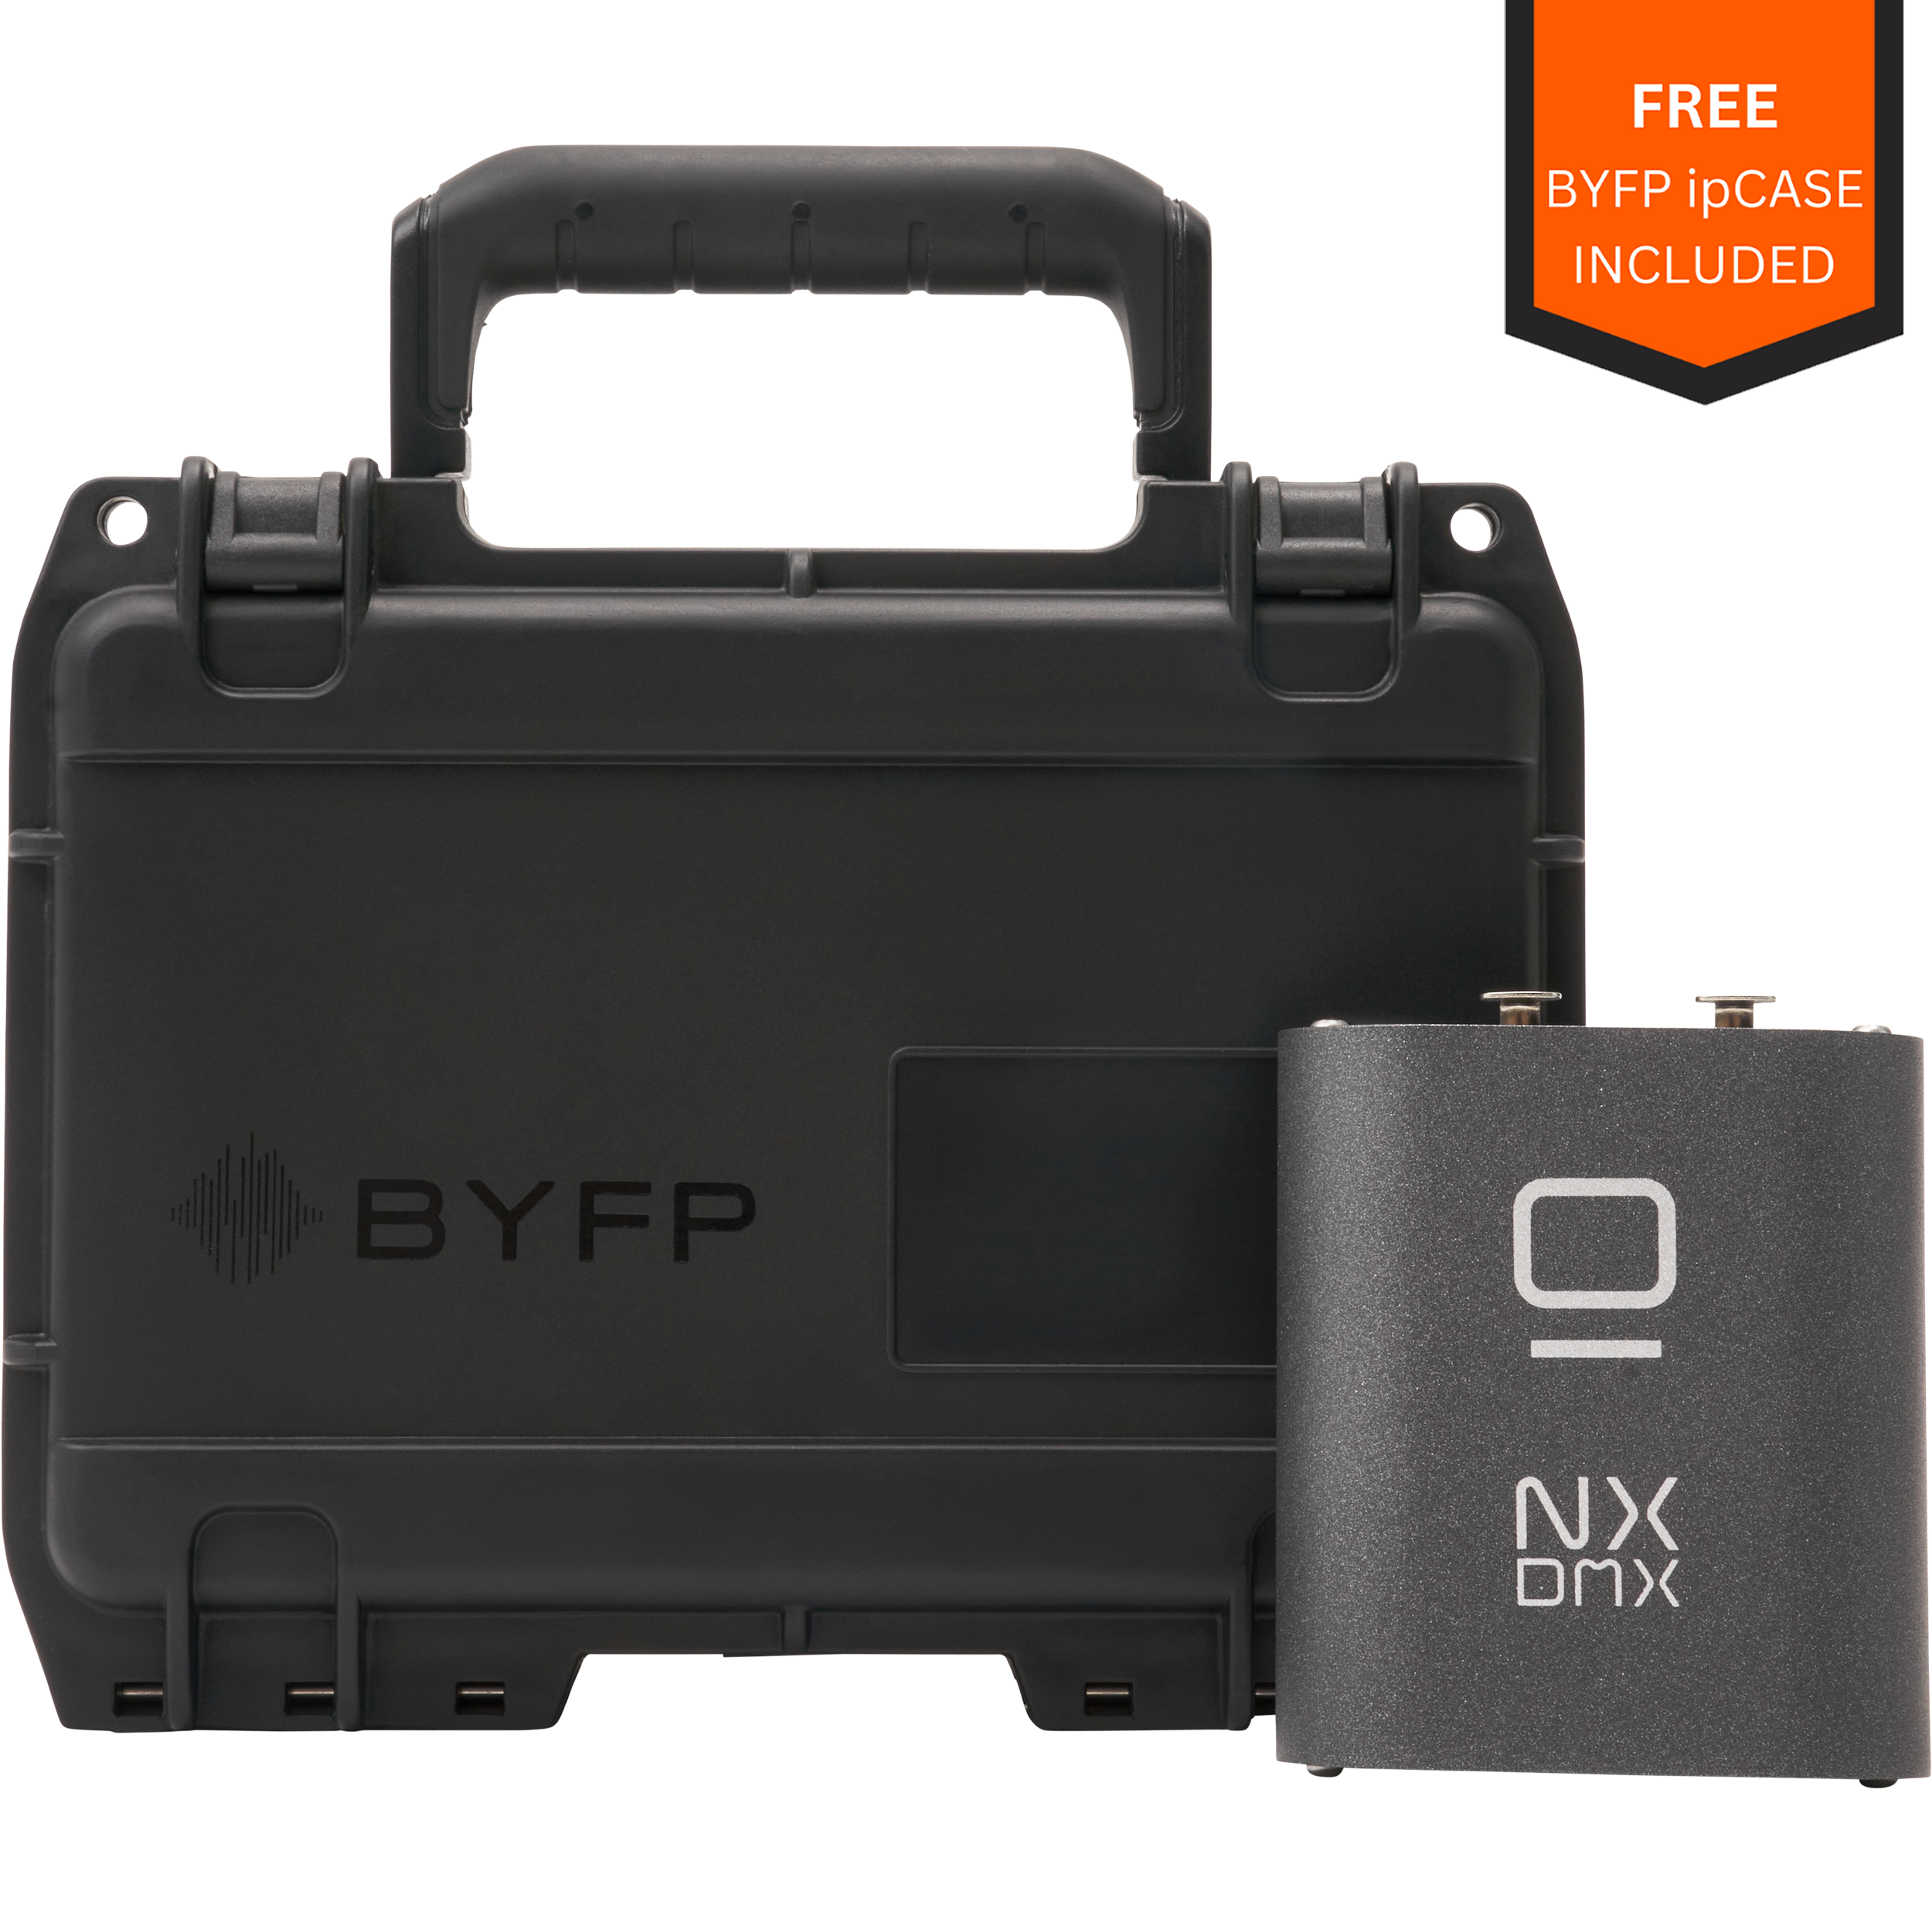 Obsidian NX DMX USB Powered 2-Port DMX Node tourPack with BYFP ipCase